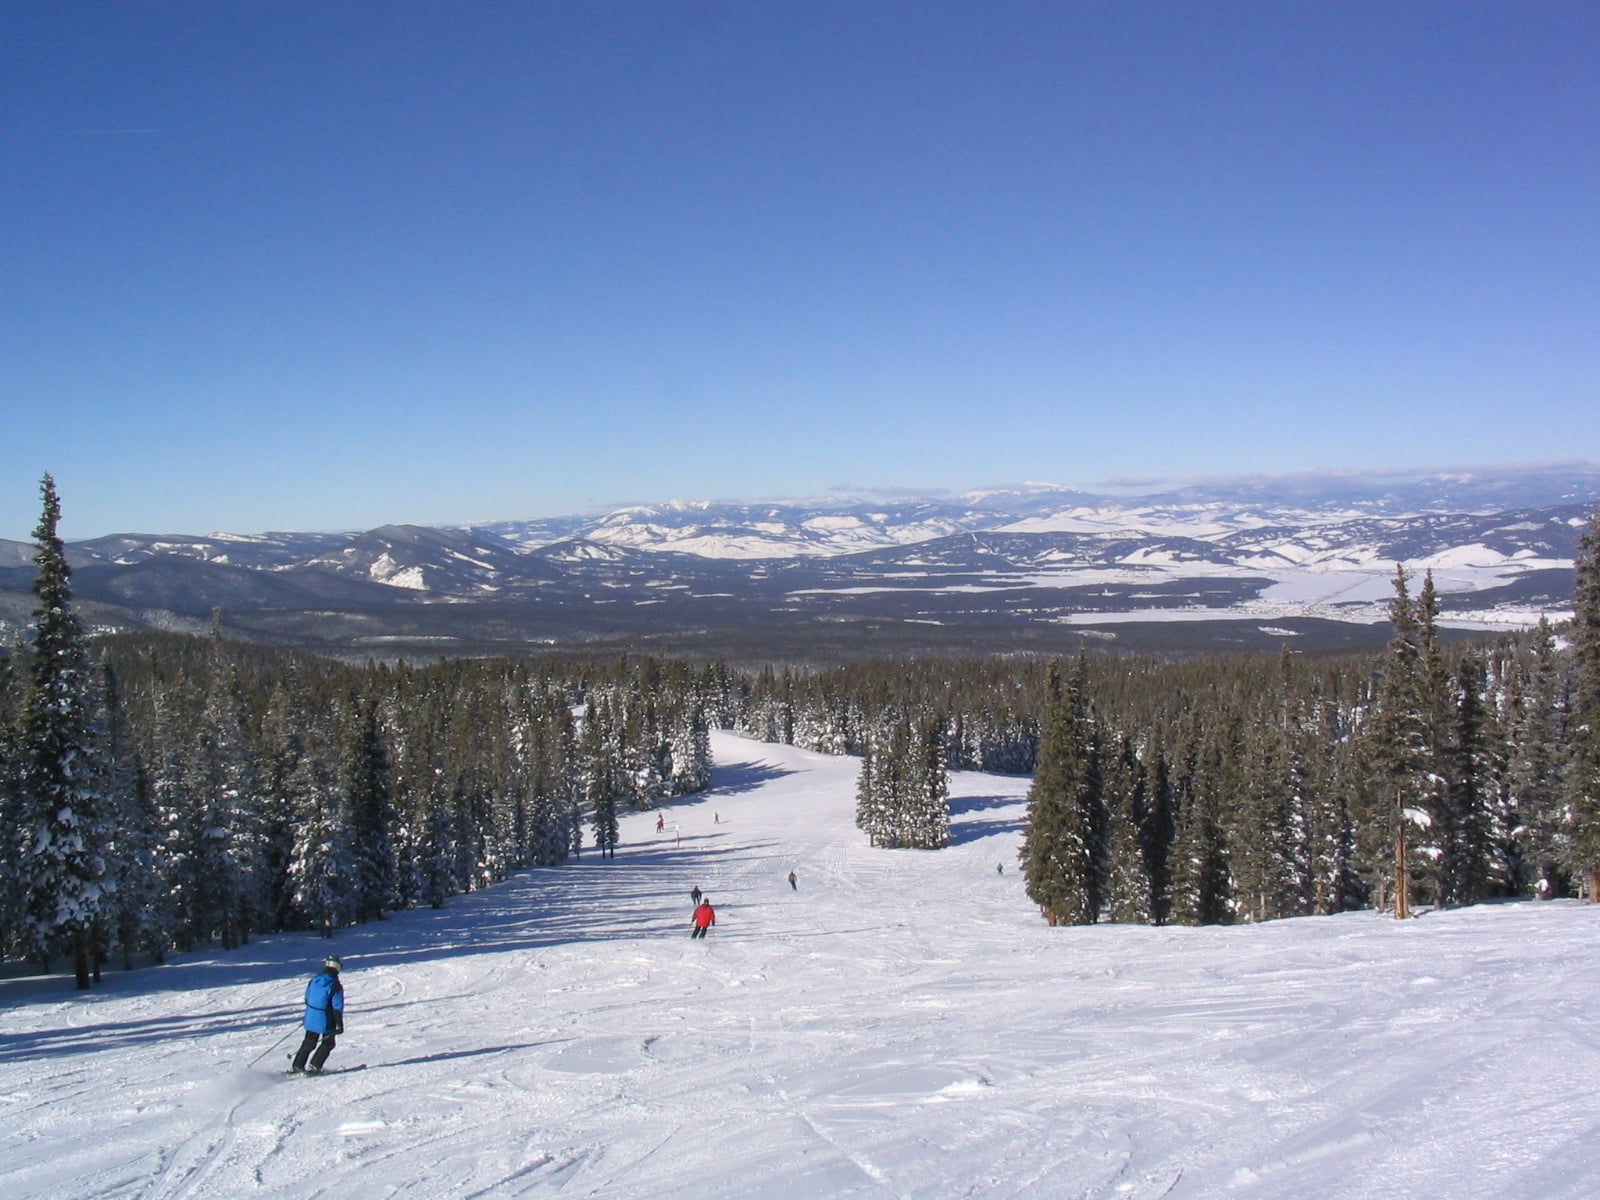 Winter park ski resorts